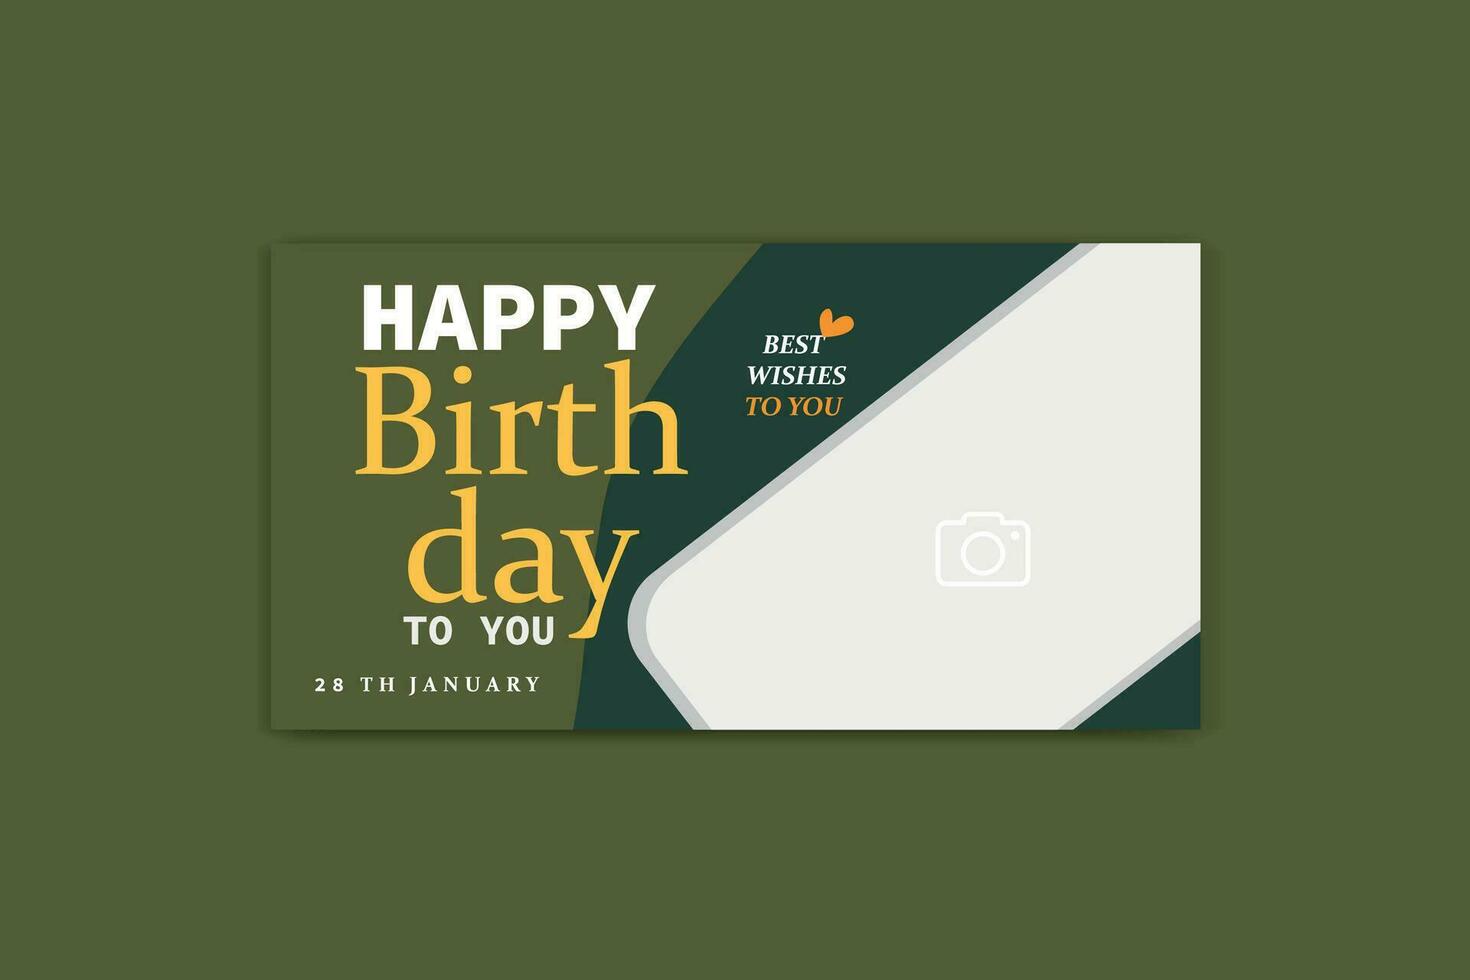 birthday social media banner design birthday template vector